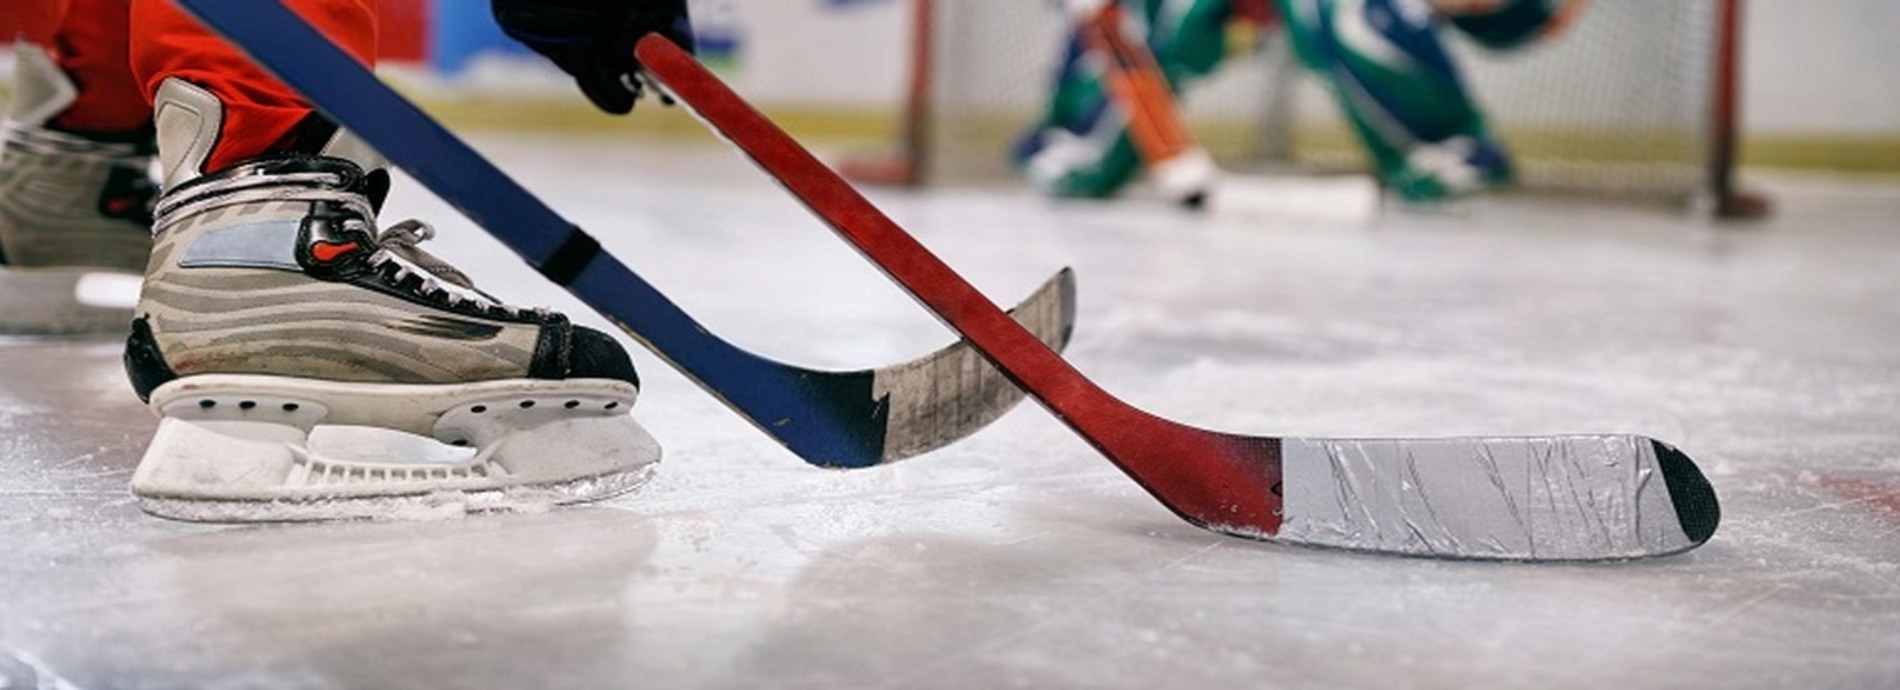 image of skates and hockey sticks